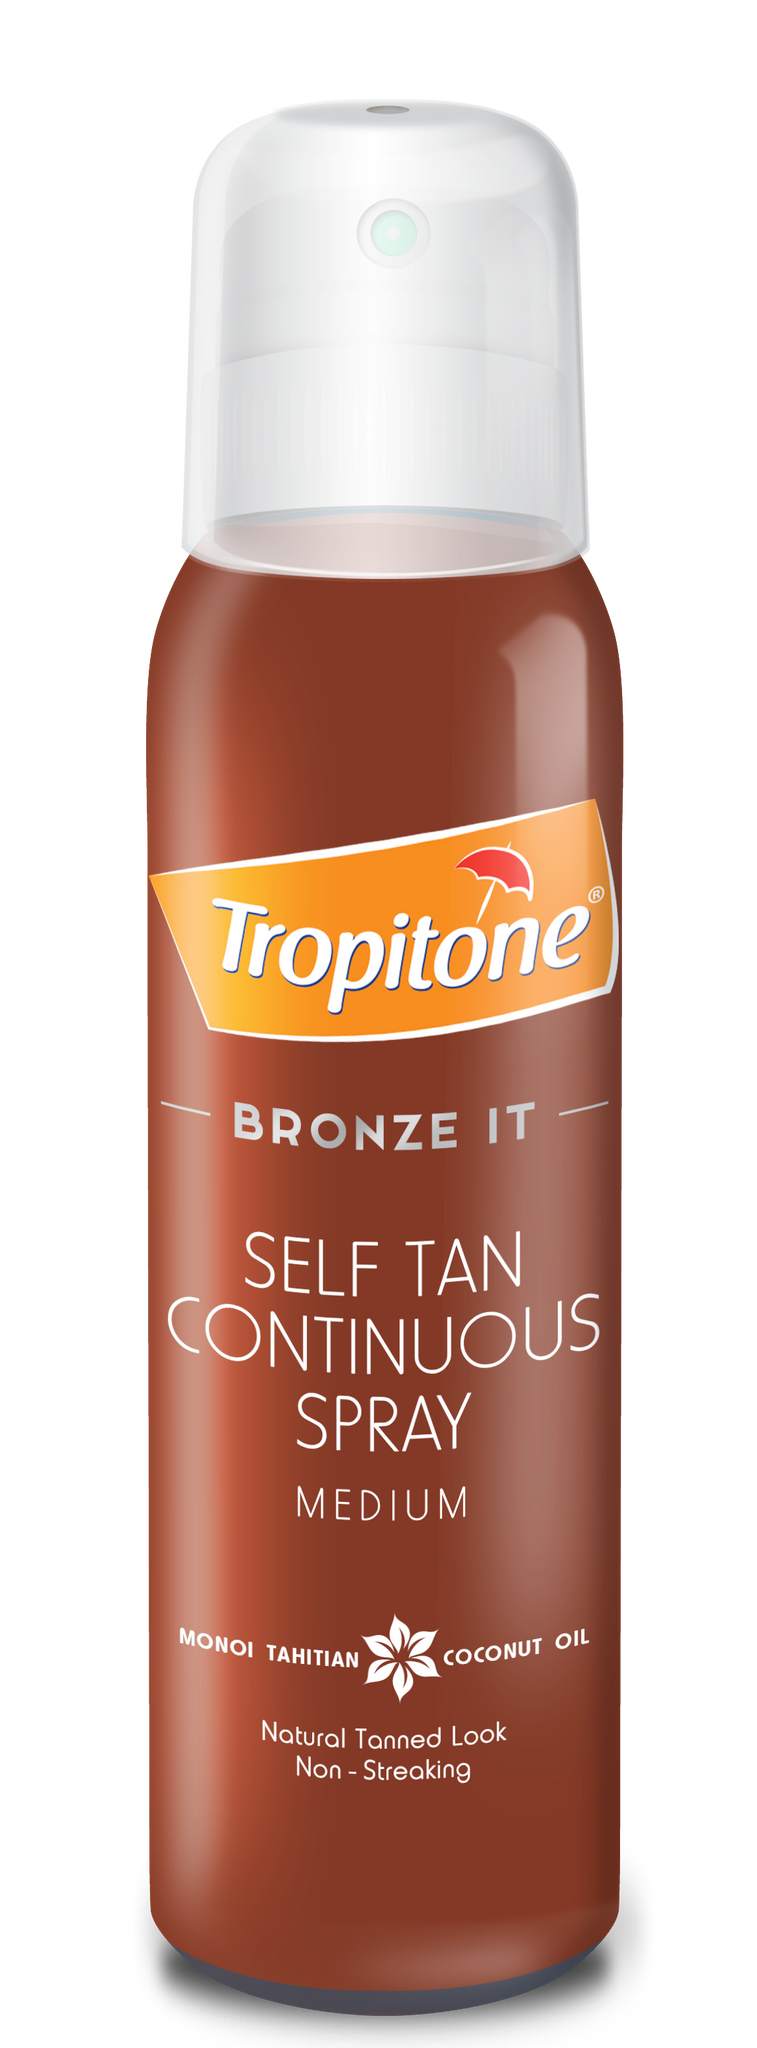 Tropitone Bronze It Selftan Continuous Spray Medium - 125ml 36-Pack